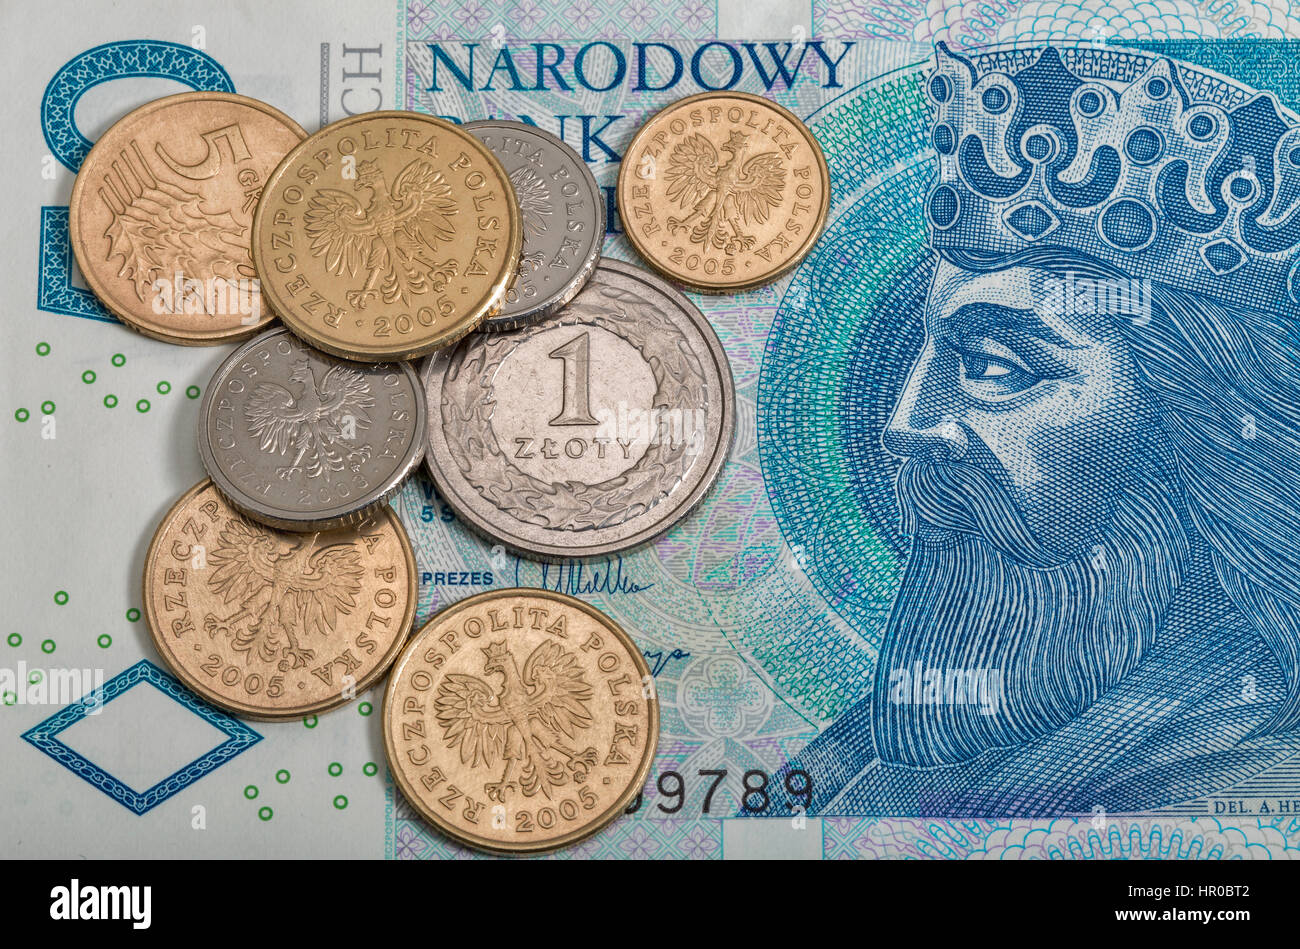 Polnische Zloty 50 Banknoten und Münzen Makro Stockfoto